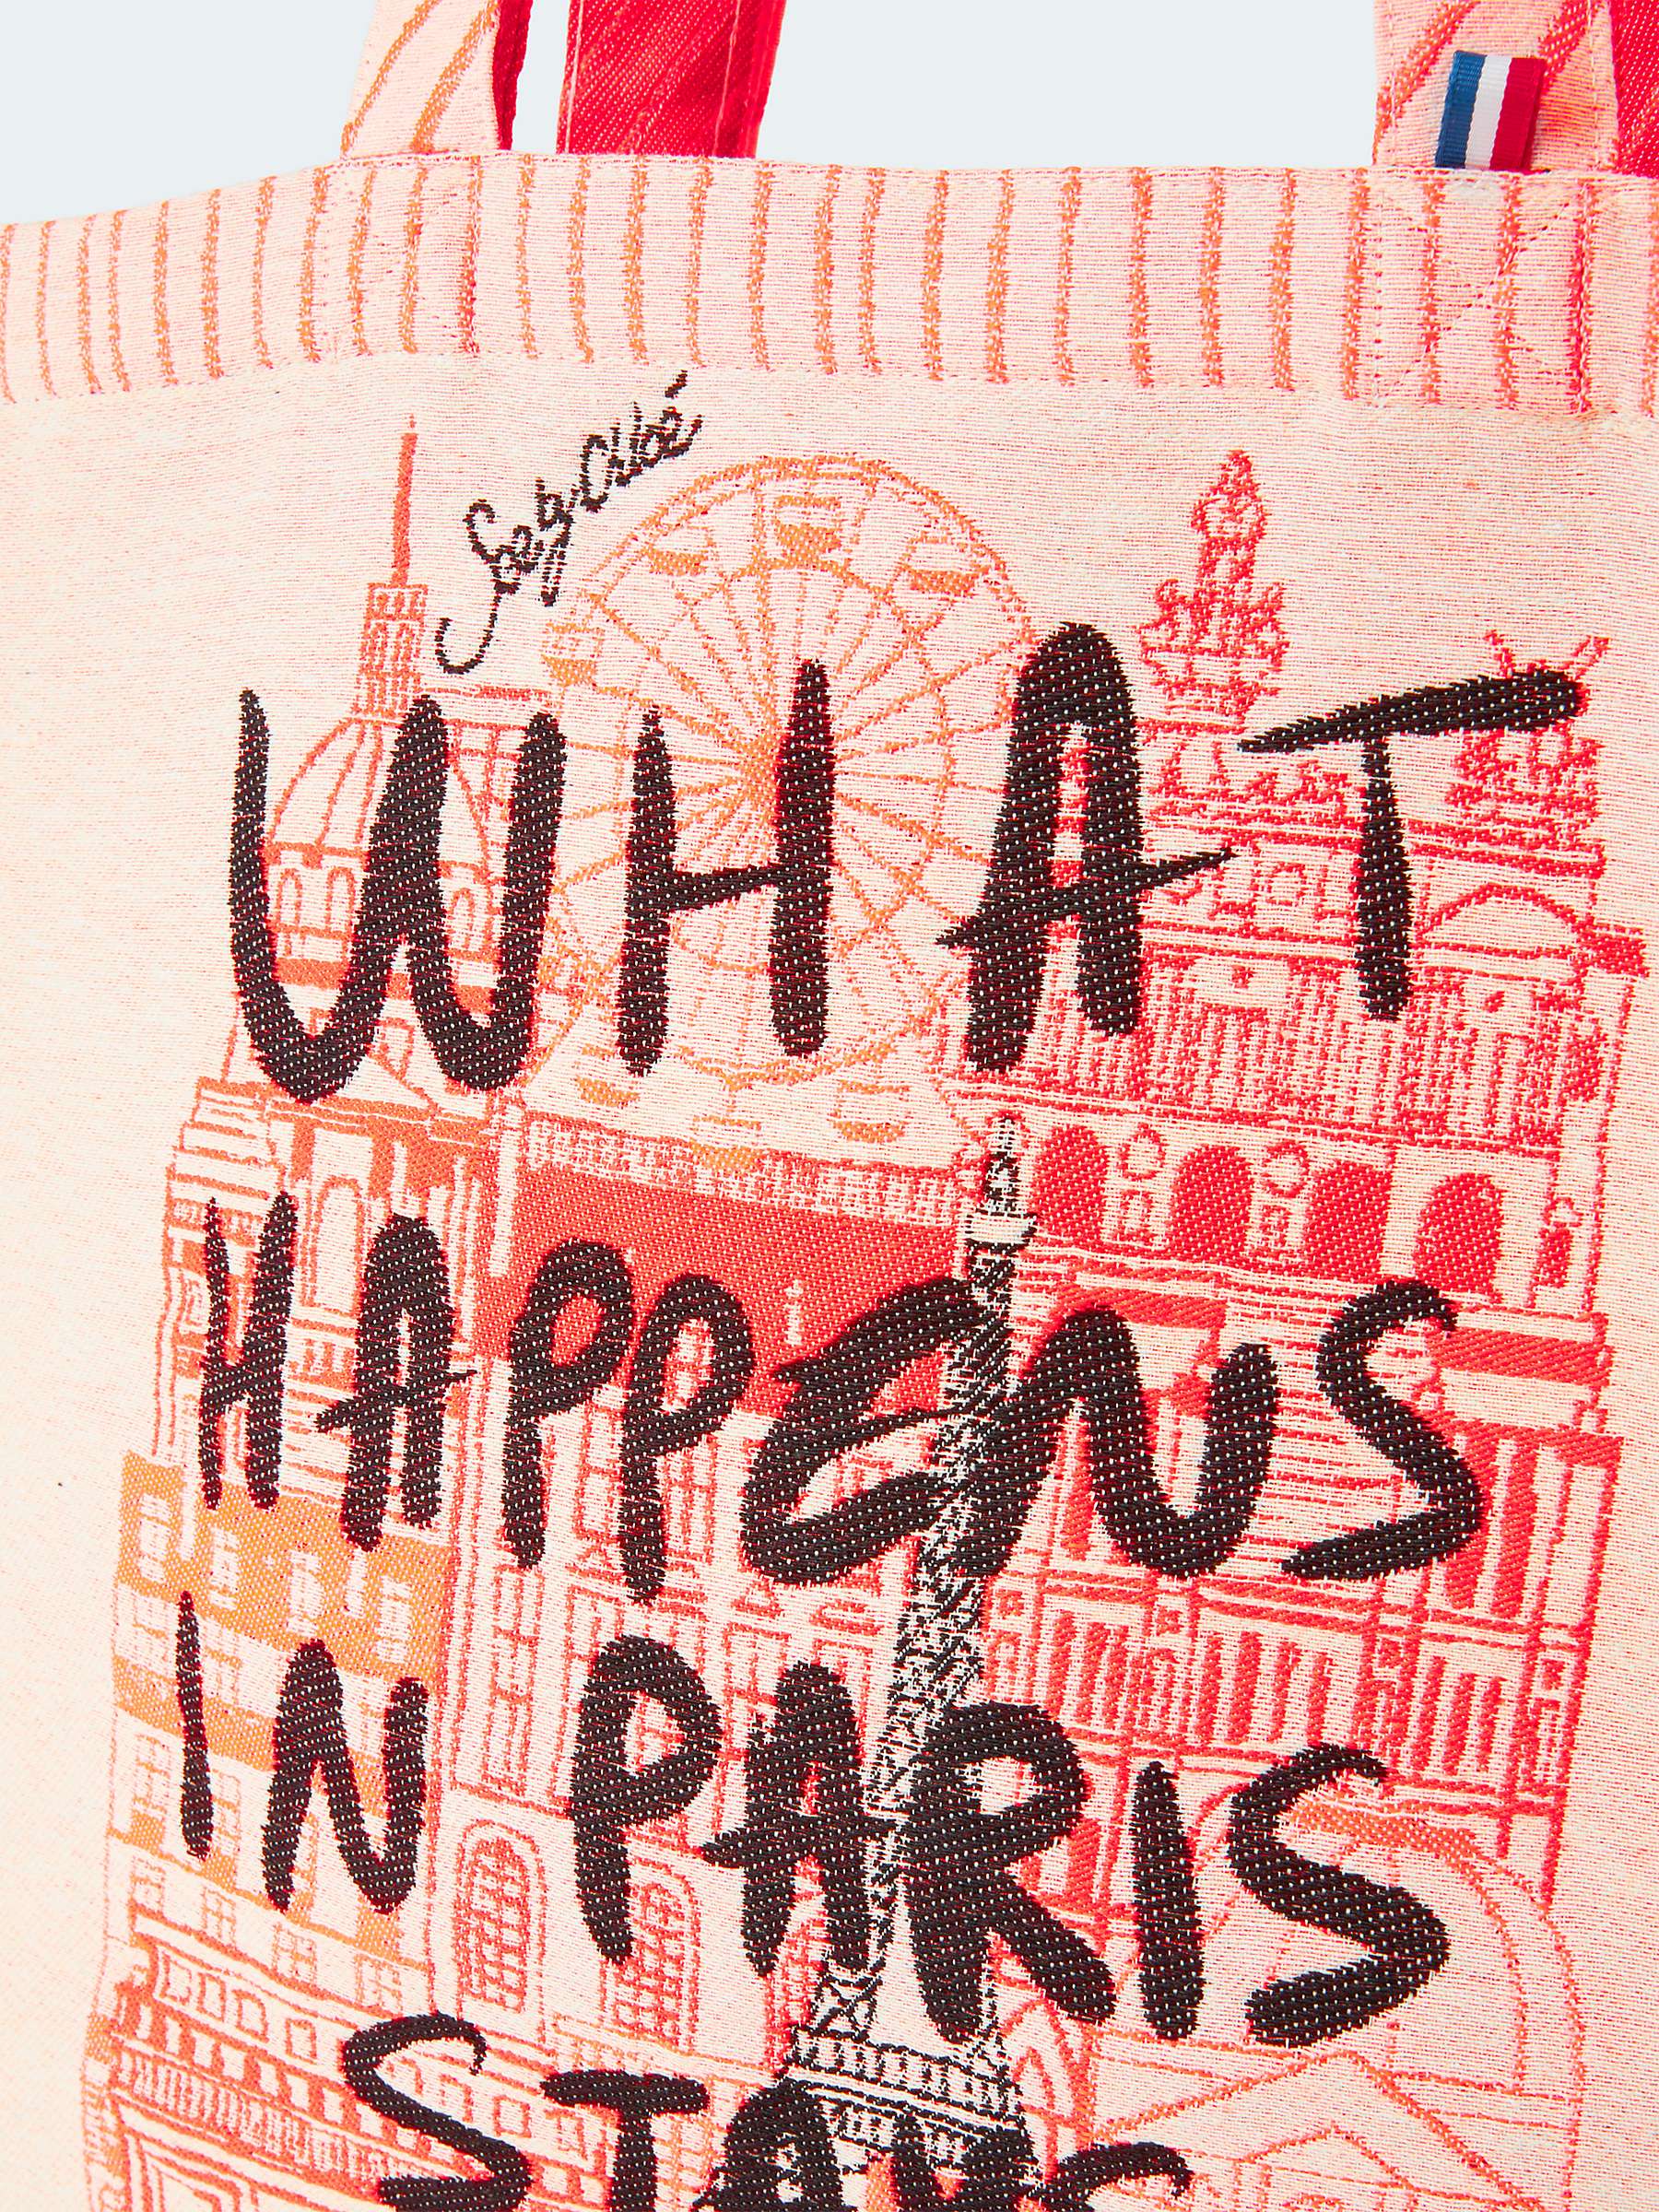 Buy See By Chloé What Happens in Paris Stays in Paris Tote Bag, Cement Beige Online at johnlewis.com